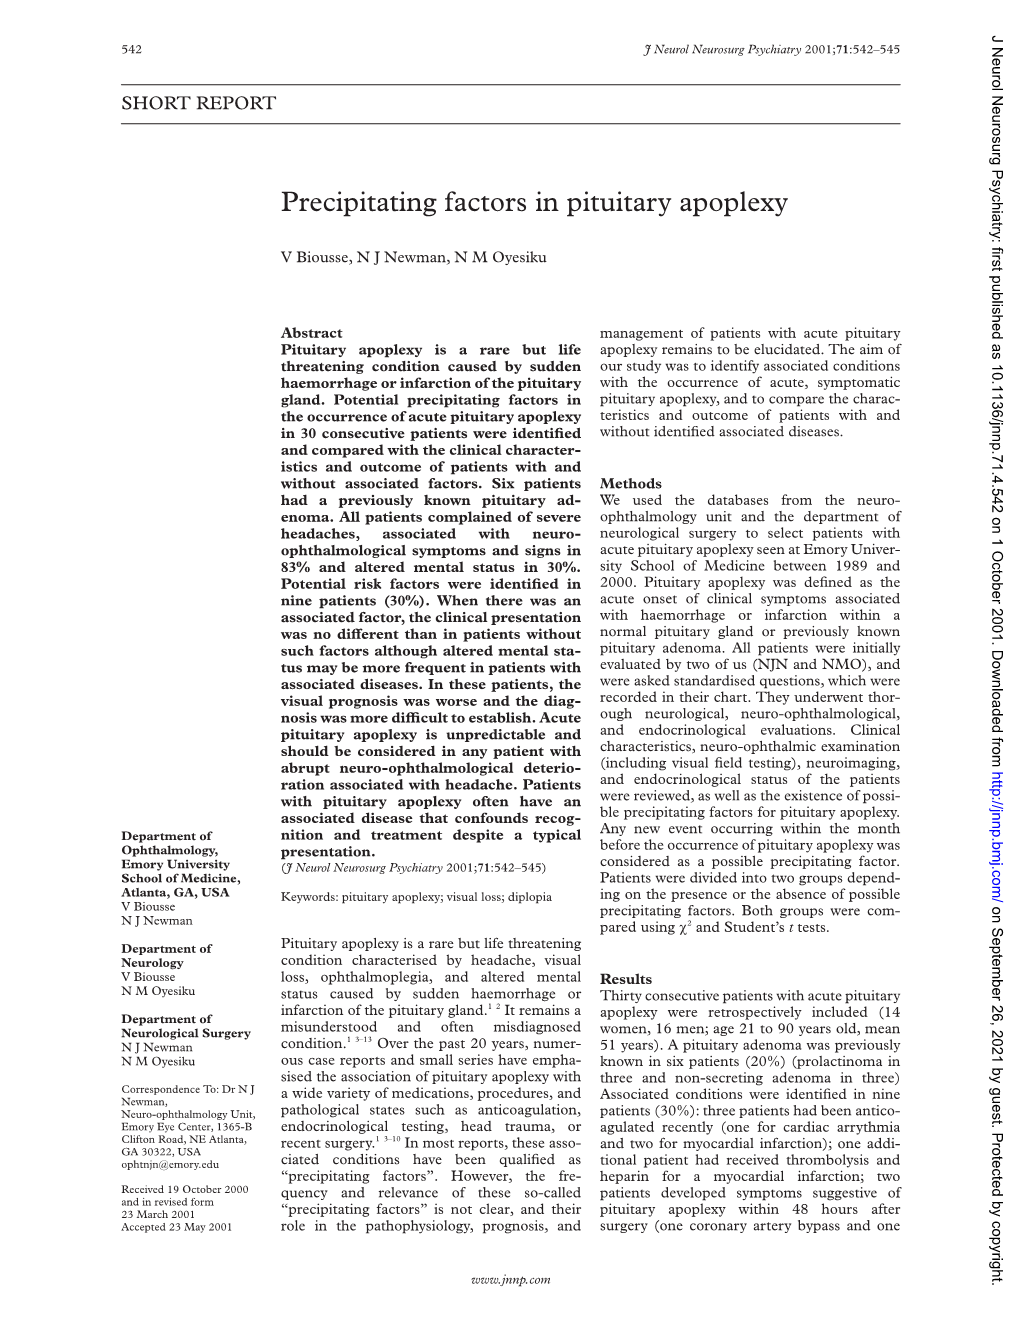 Precipitating Factors in Pituitary Apoplexy